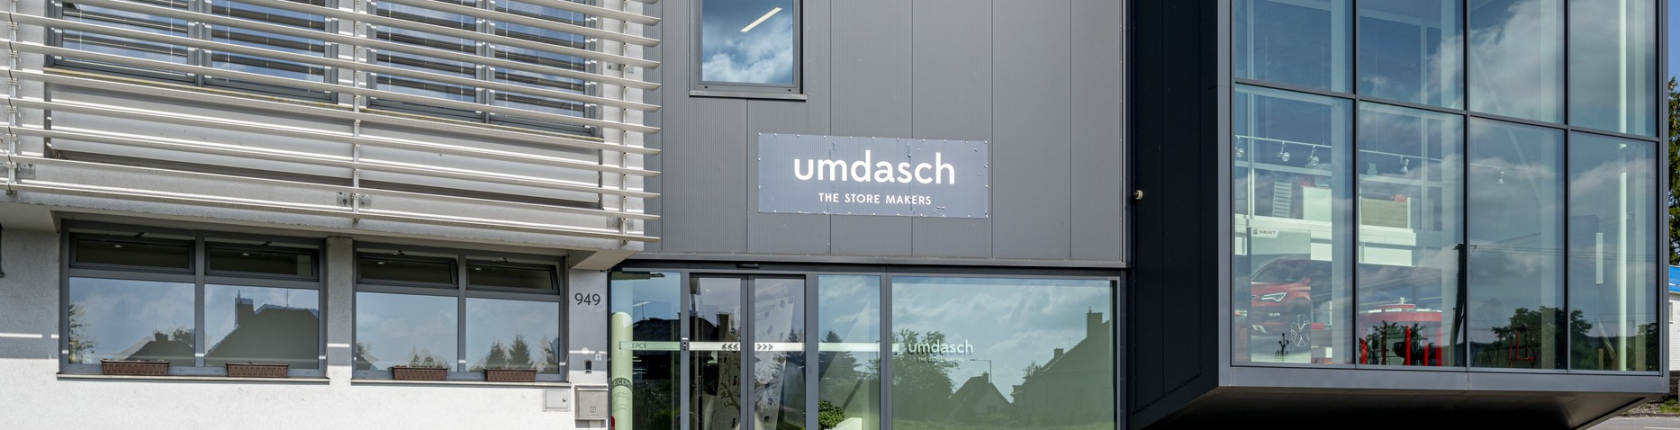 Umdasch The Store Makers 